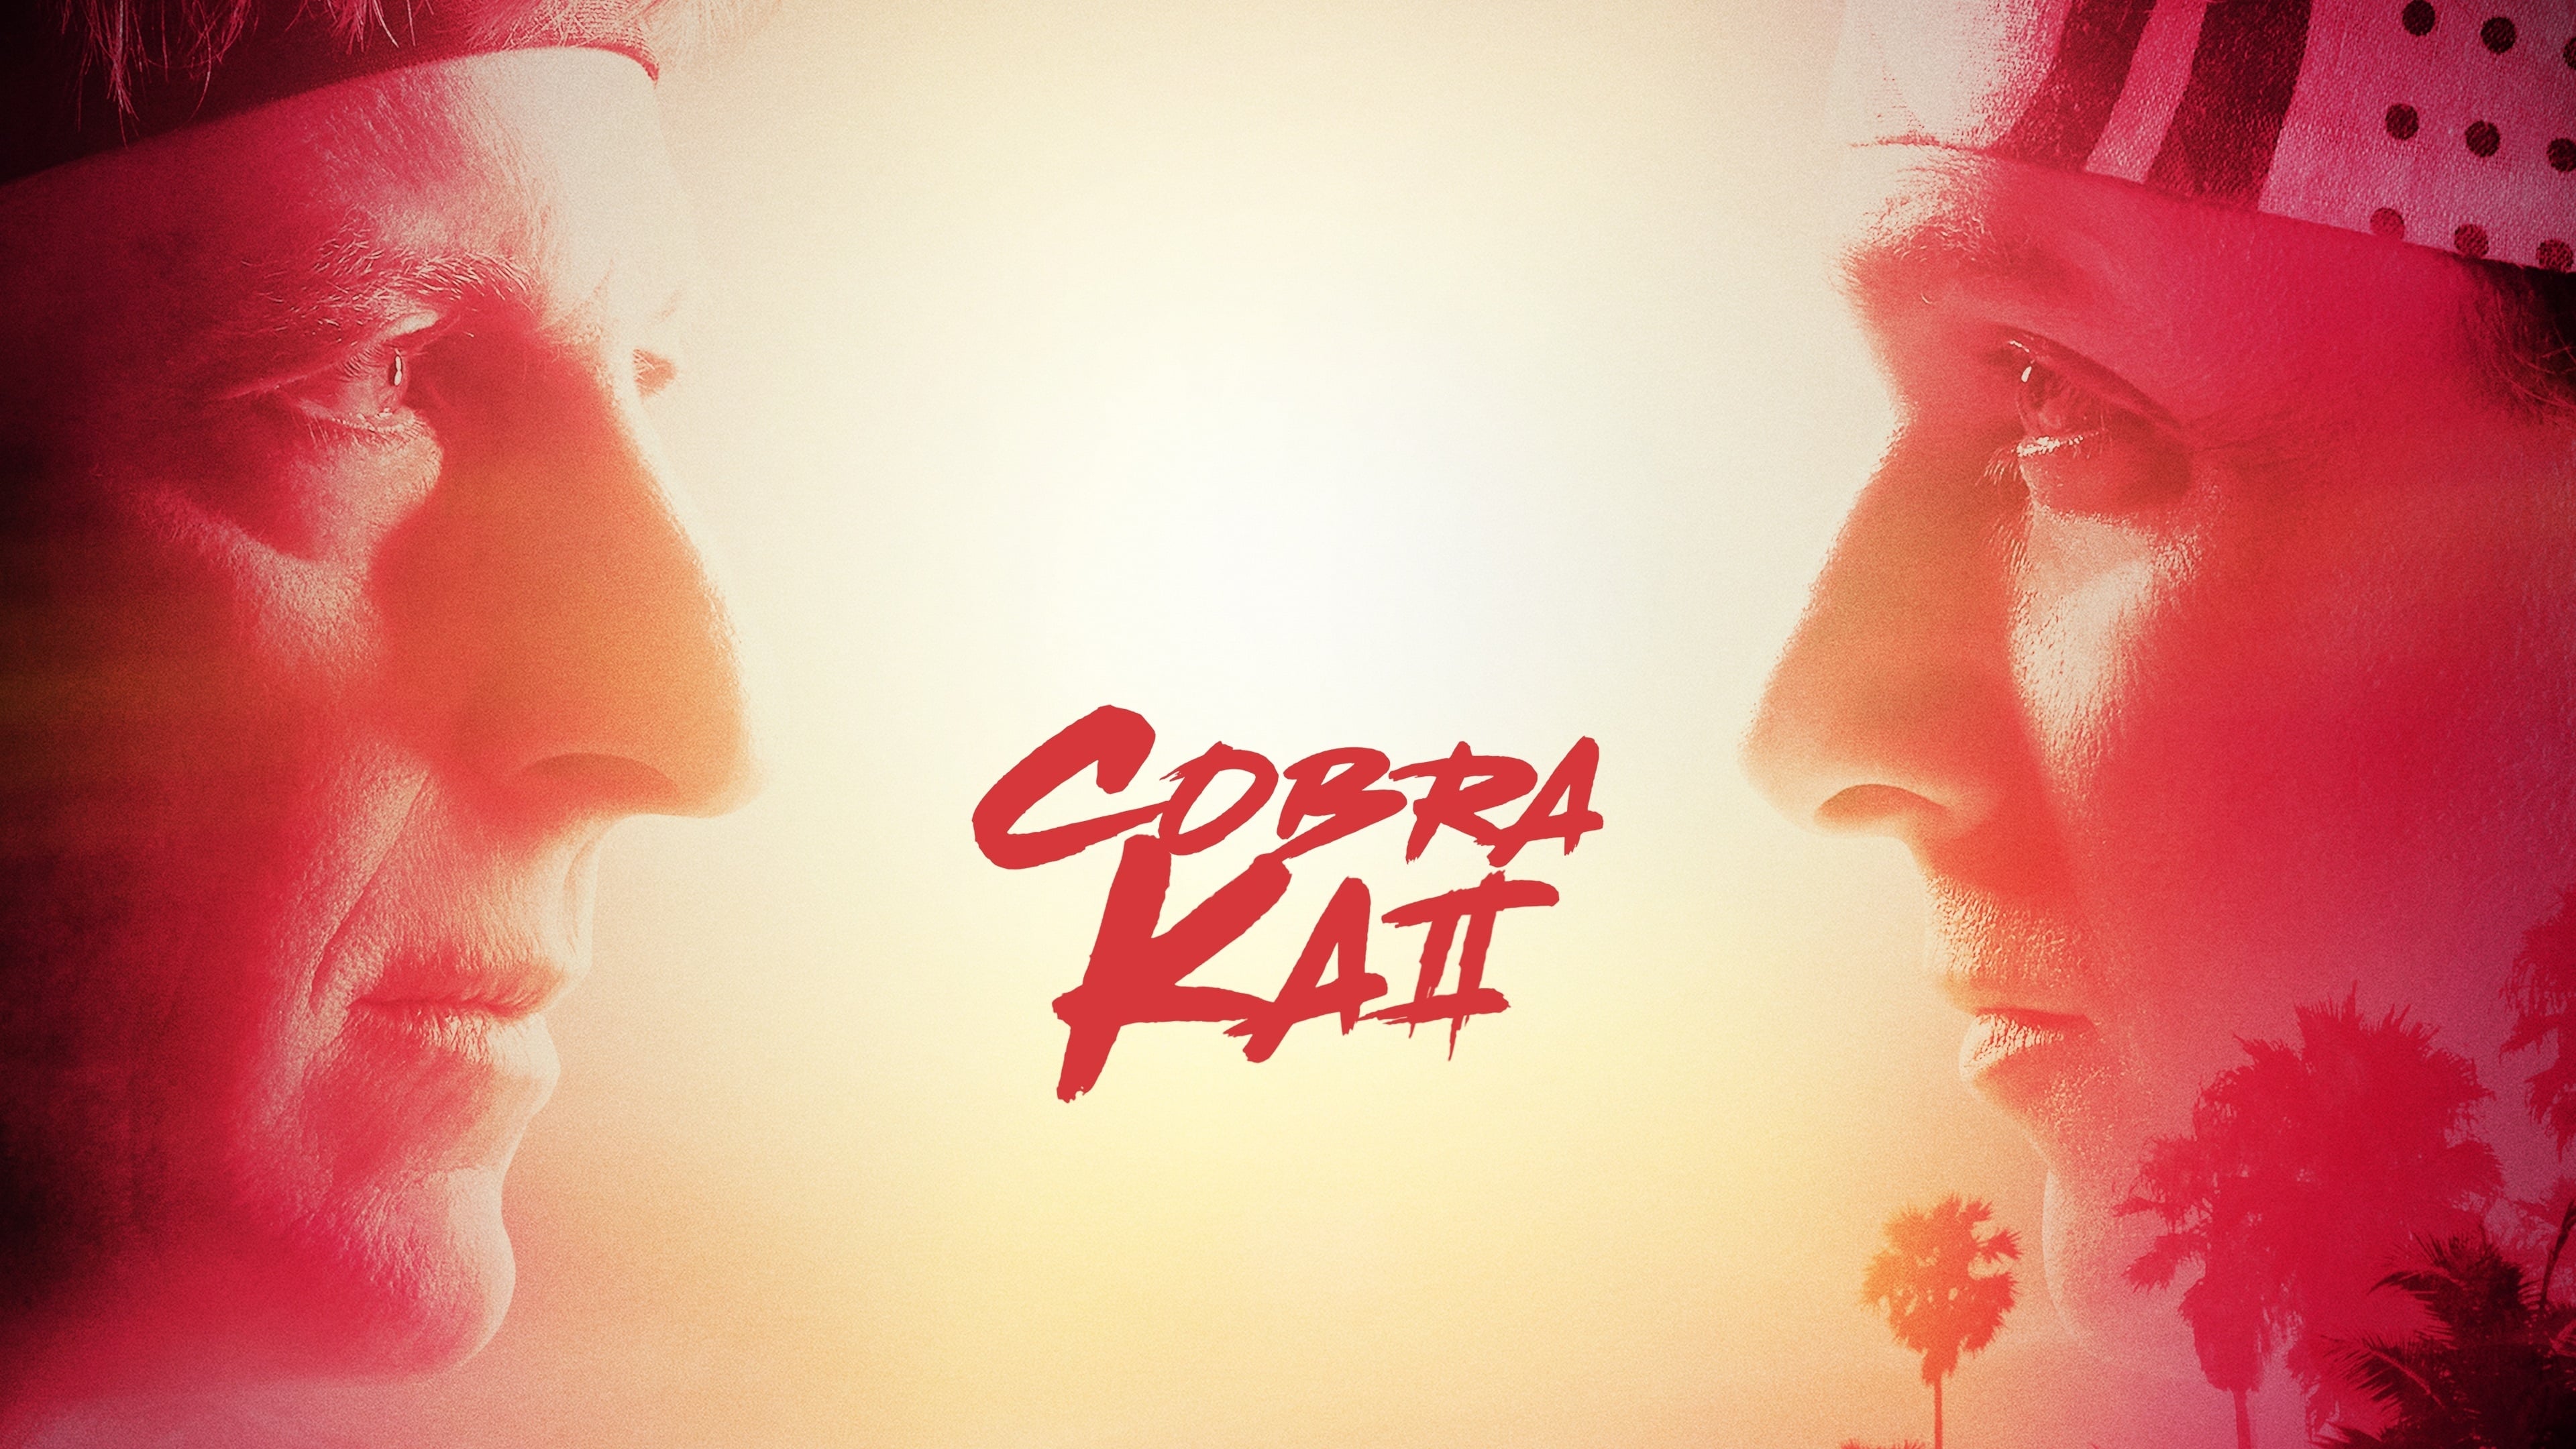 Cobra Kai - Season 3